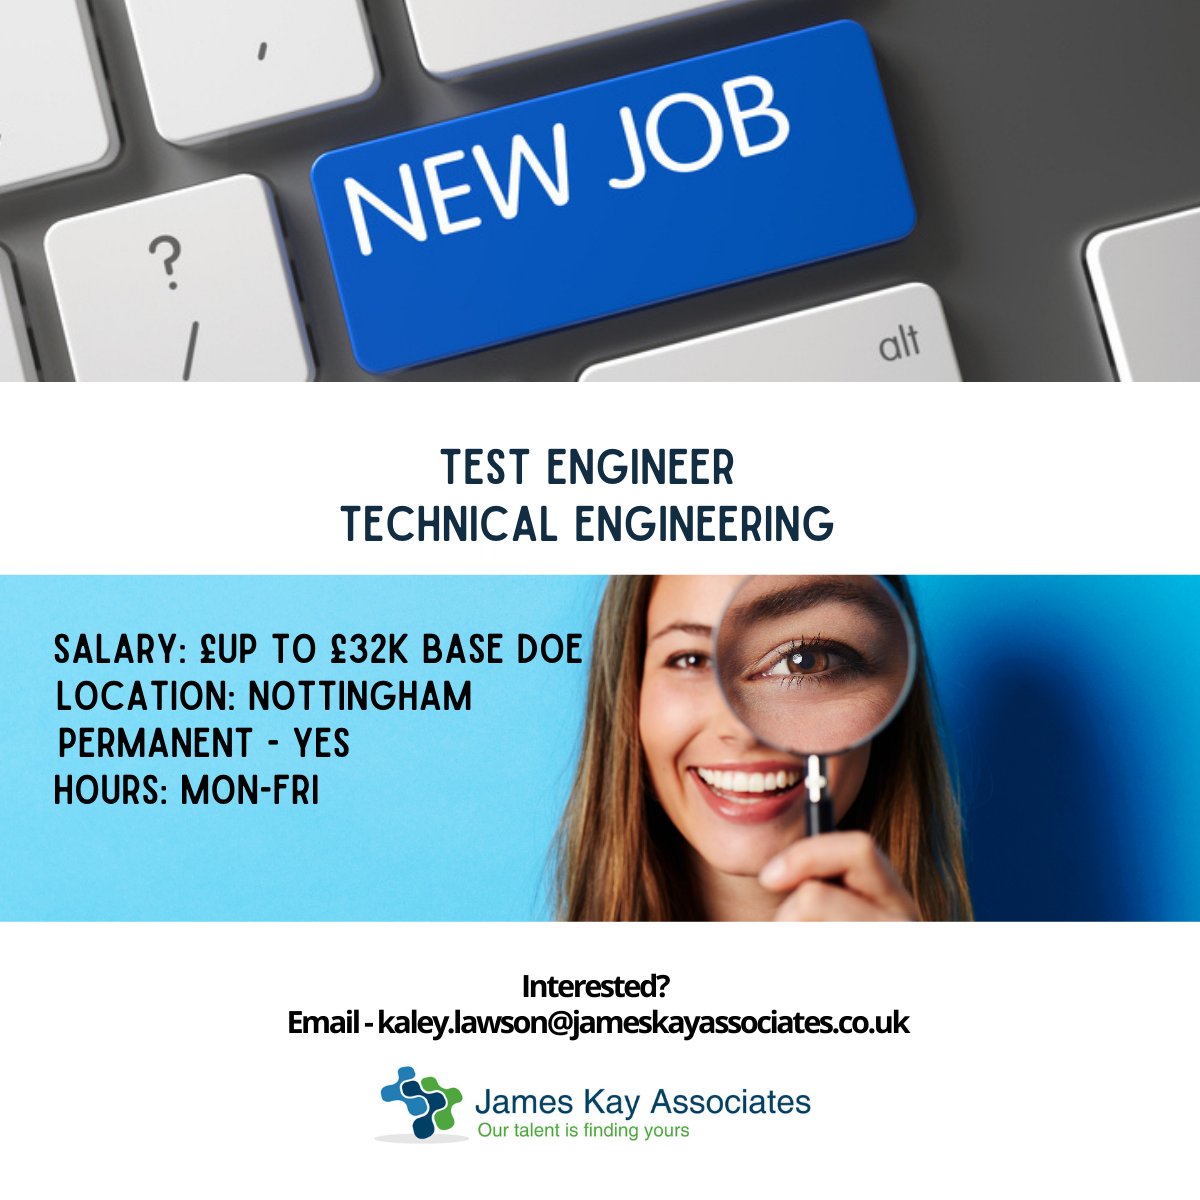 #hiring #testengineer #permanent #permanentjob #engineeringsector #nottinghamjobs #Nottingham